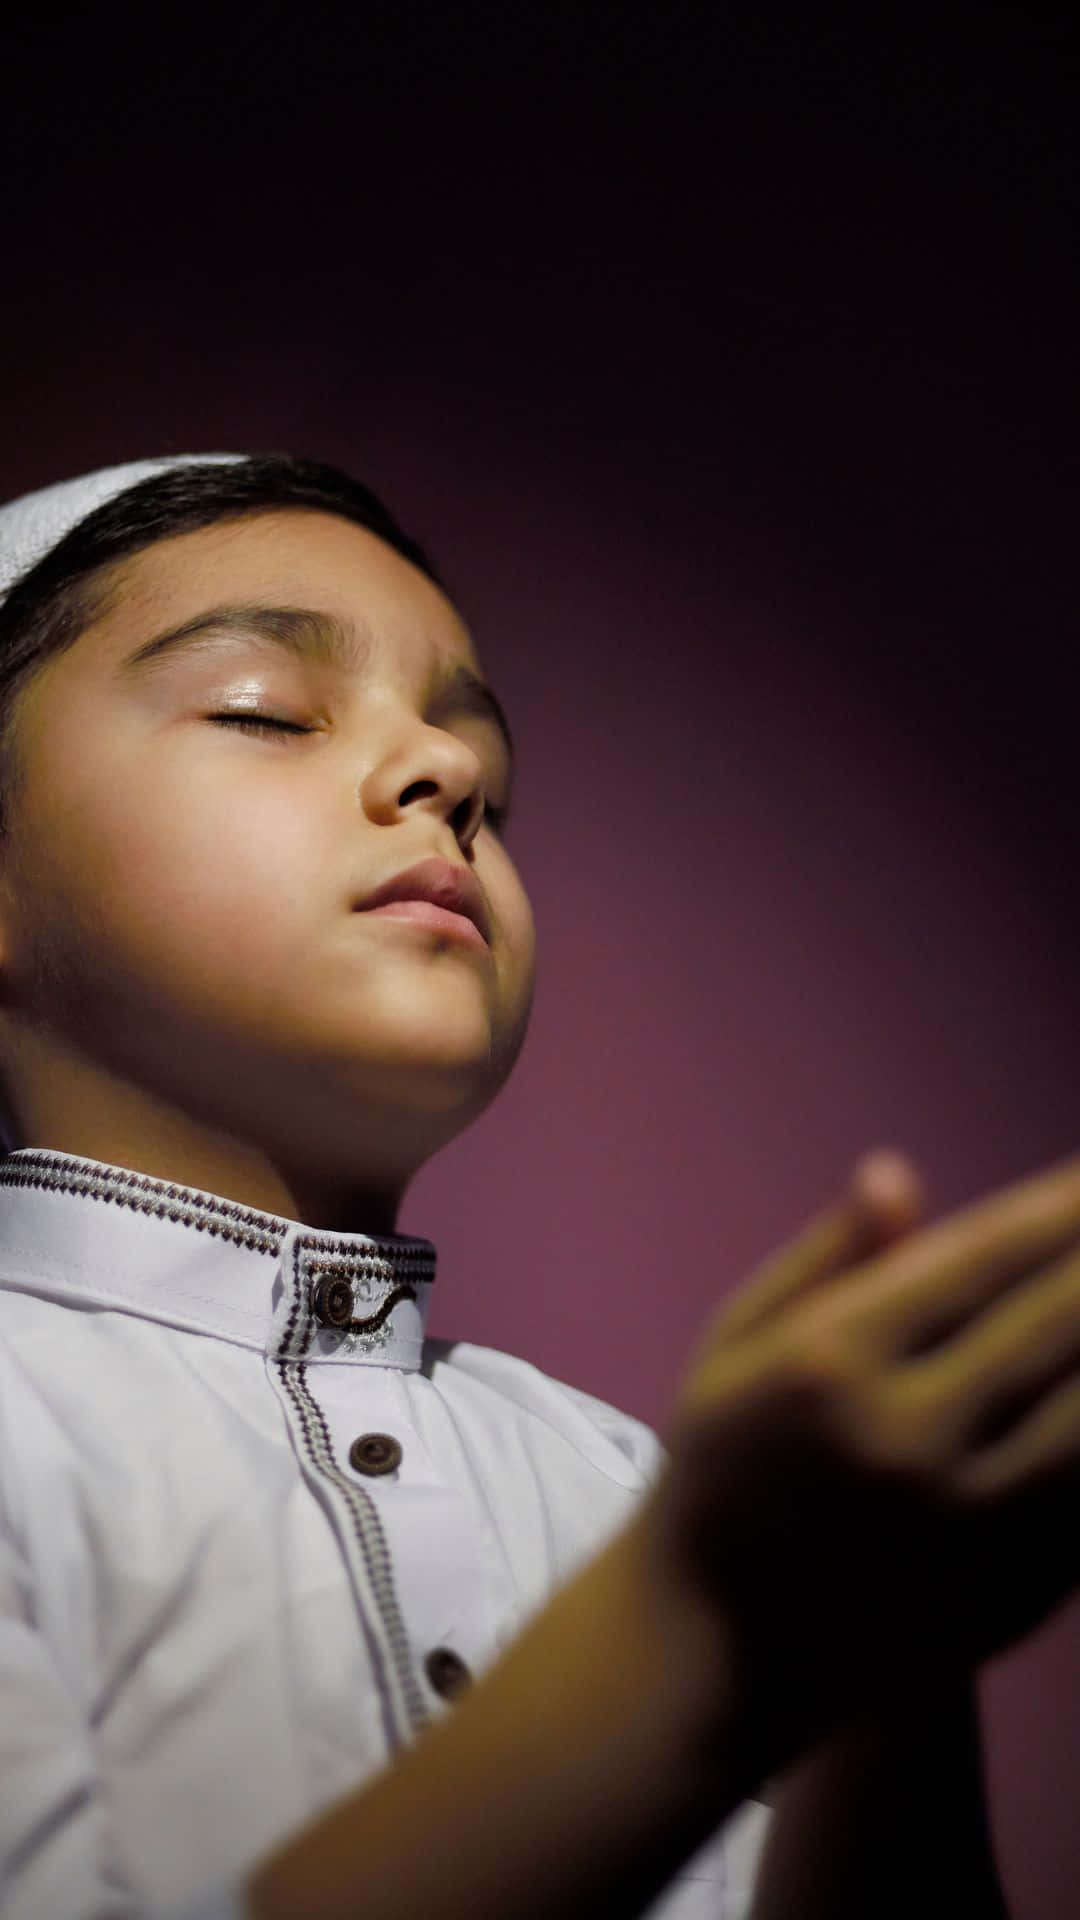 Praying Muslim Boy Dark Violet Wallpaper